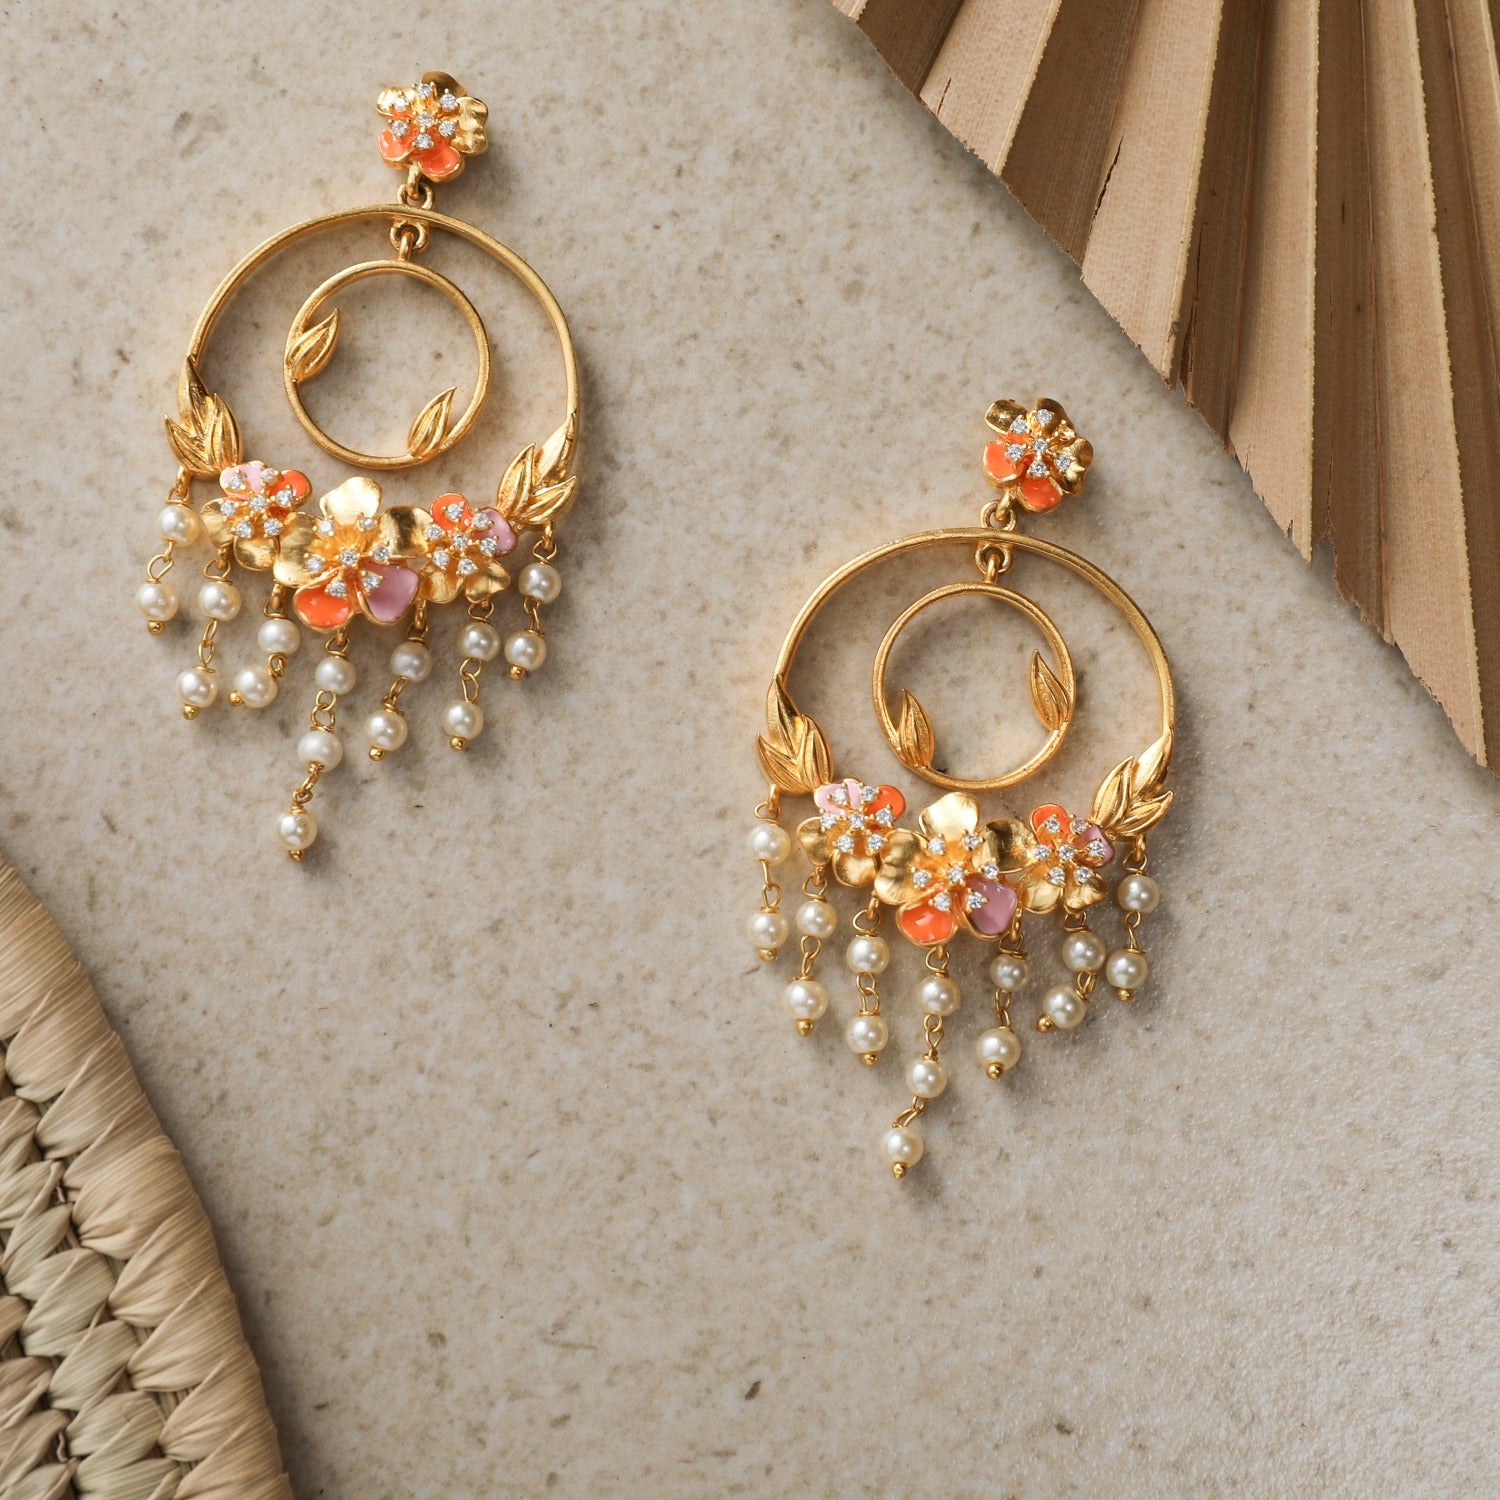 Buy earrings for women indian ethnic jewelry dangle earring jhumke gift